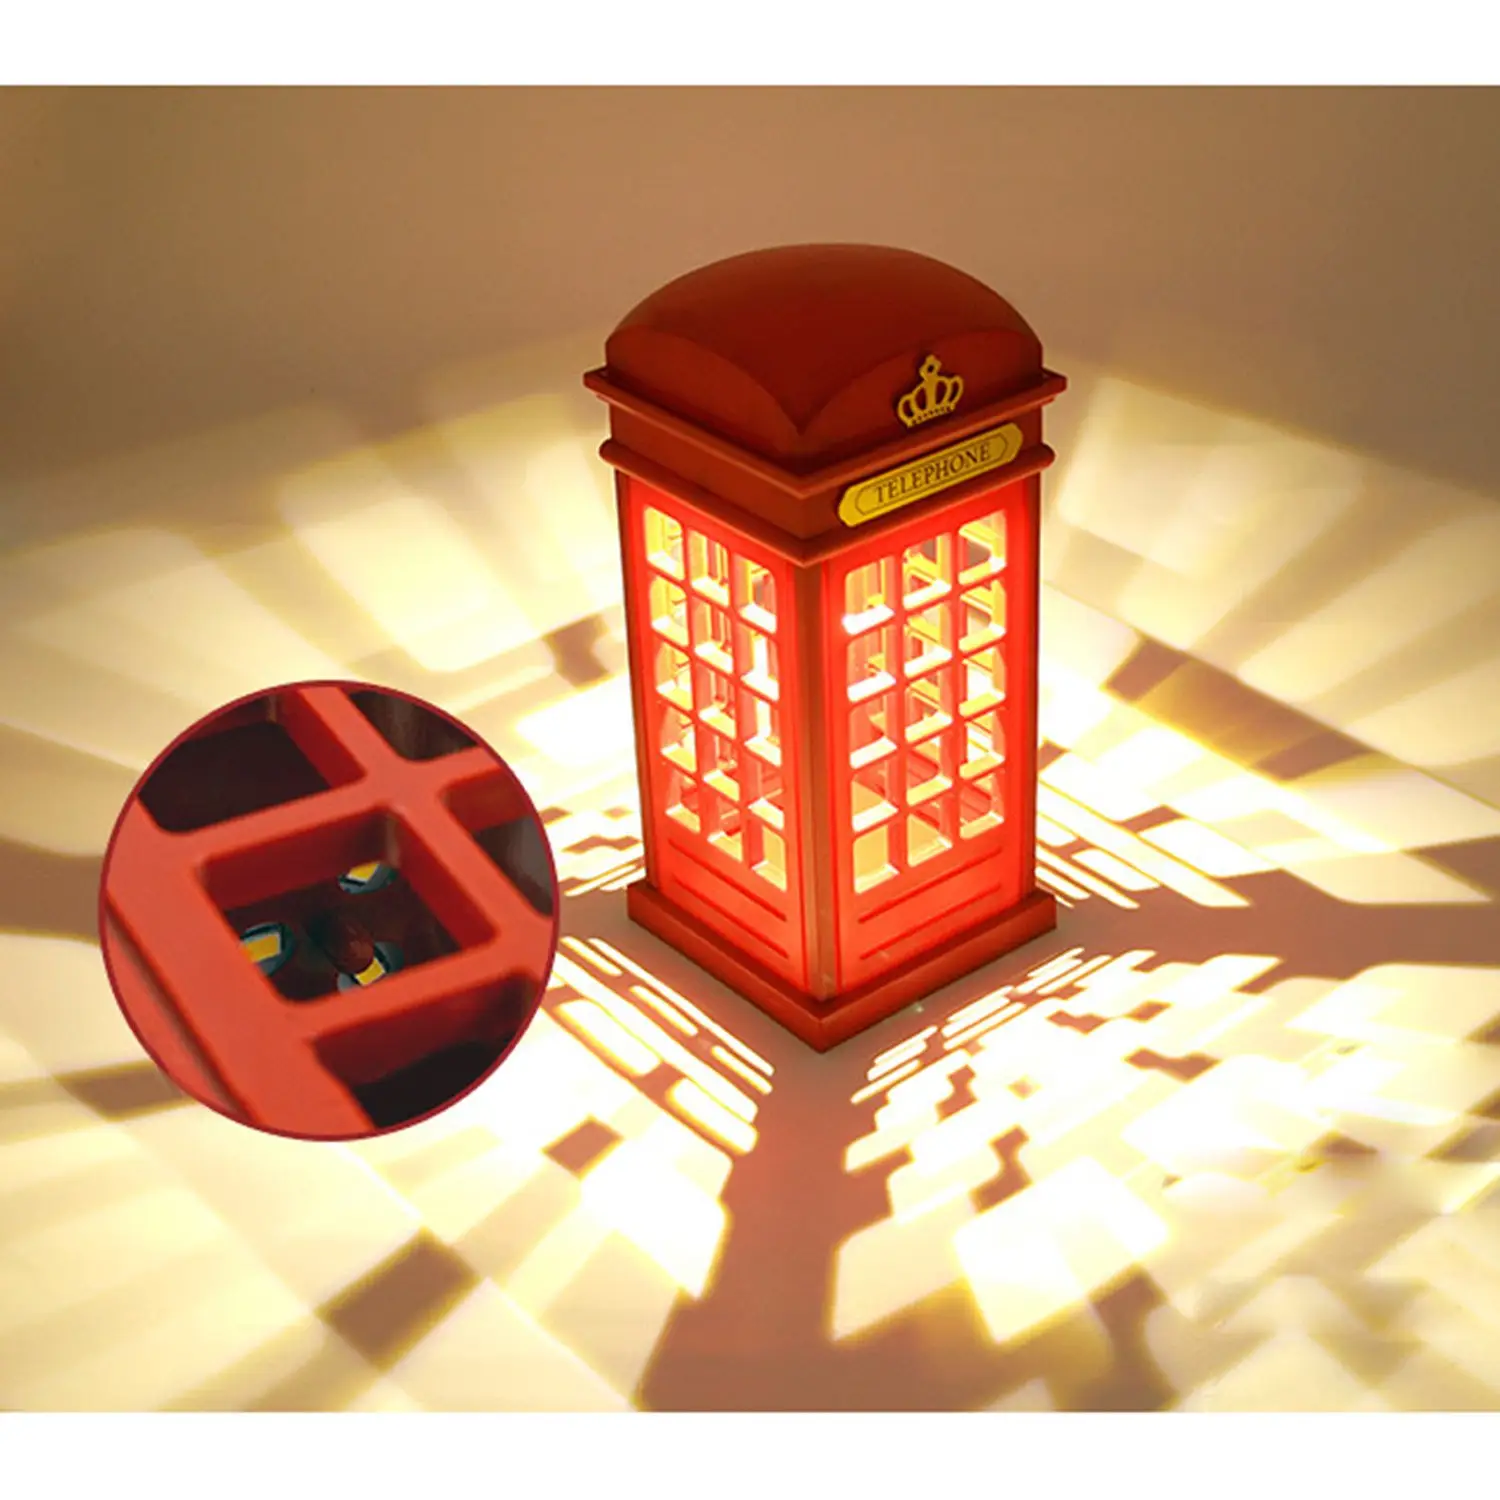 Bedside Lamp LED Night Desk Light -  London Telephone Booth Design, USB Charging LED Table Lamp